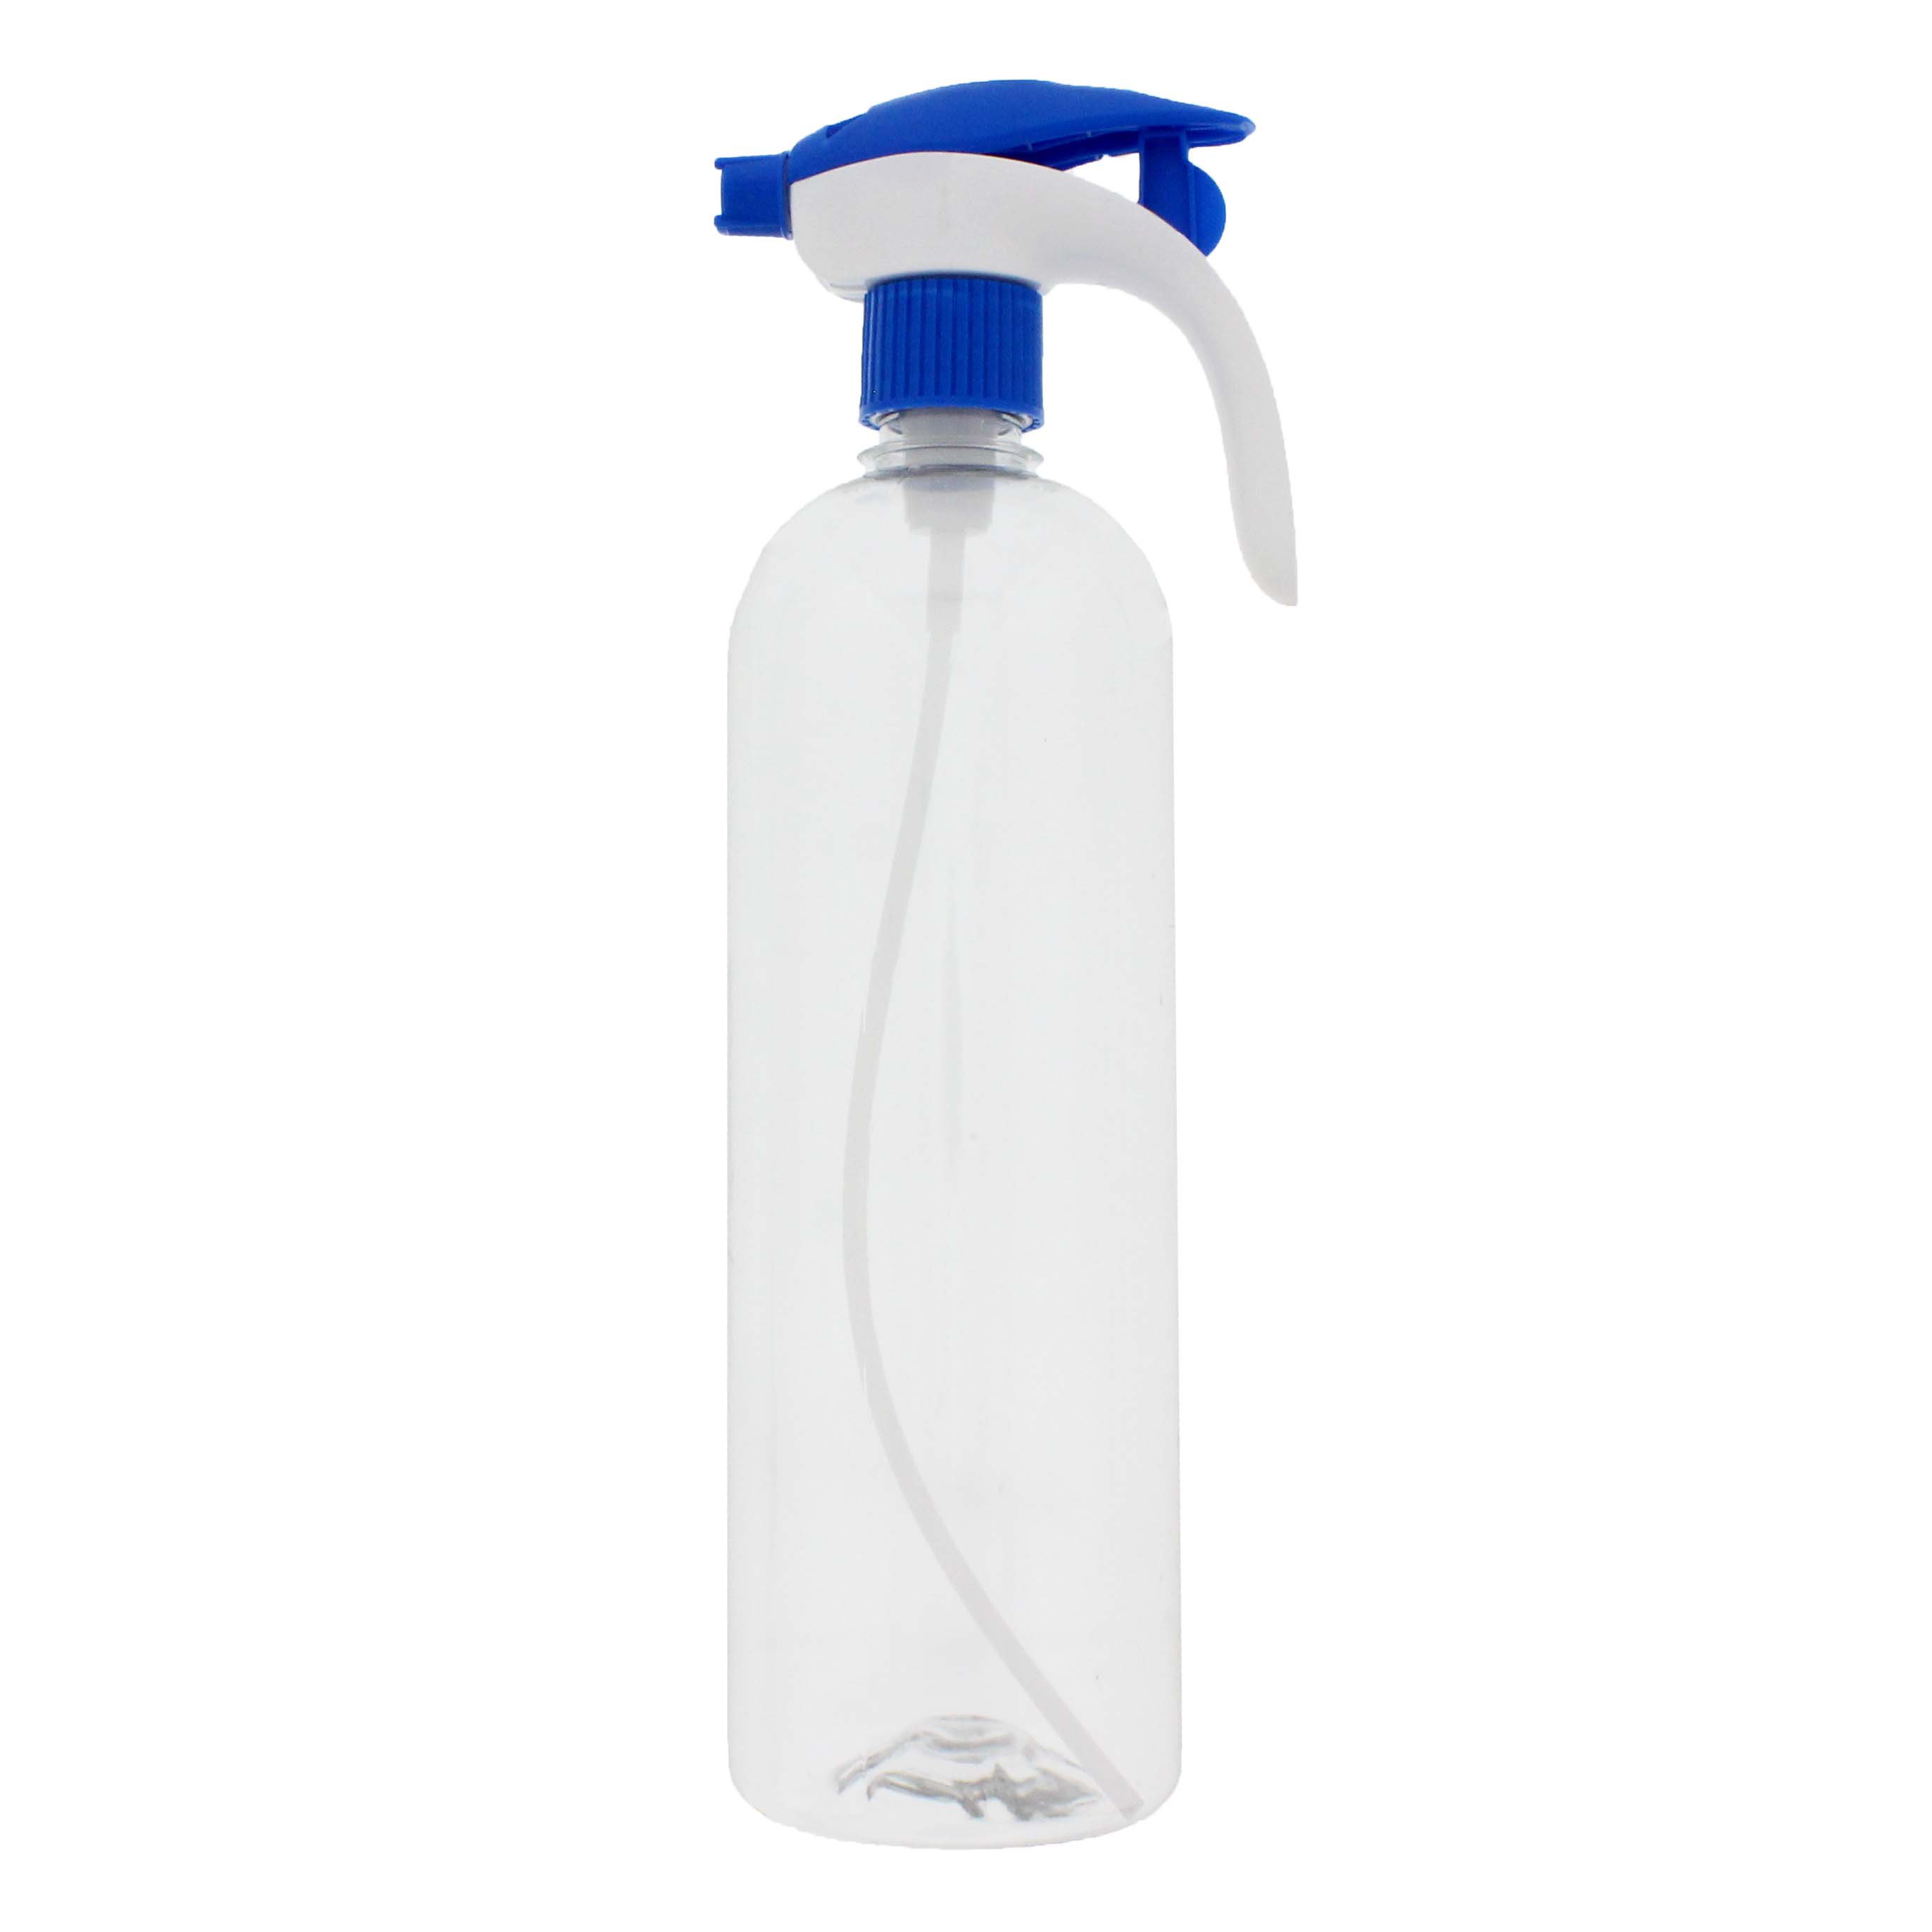 buy plastic spray bottles